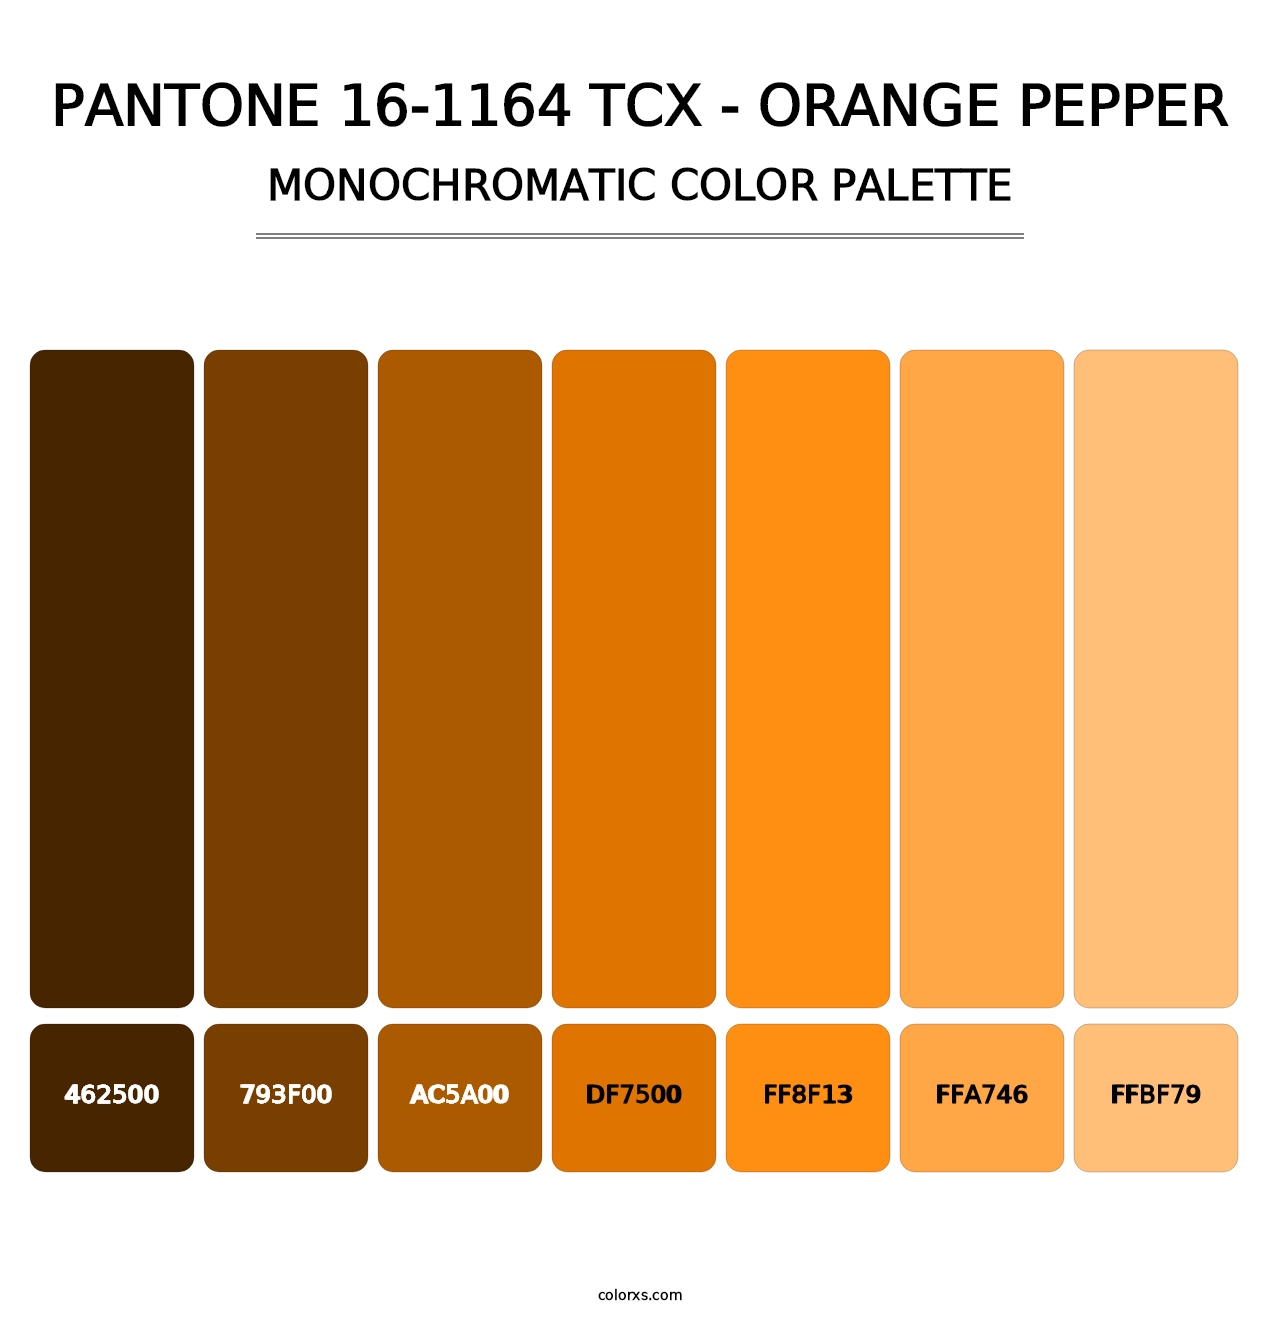 PANTONE 16-1164 TCX - Orange Pepper - Monochromatic Color Palette